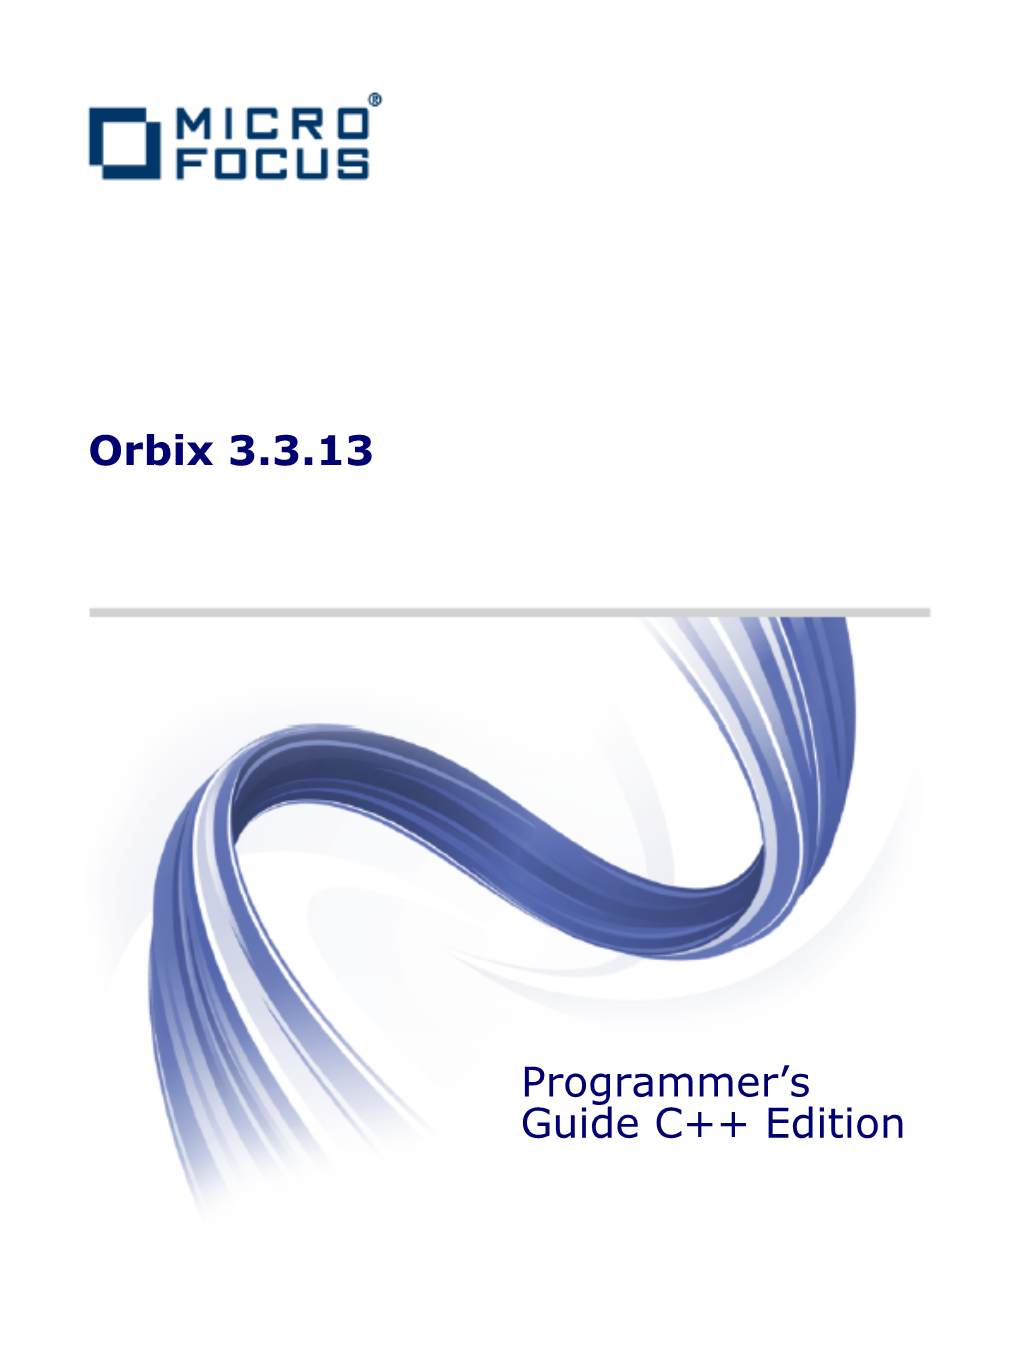 Orbix 3.3.13 Programmer's Guide C++ Edition